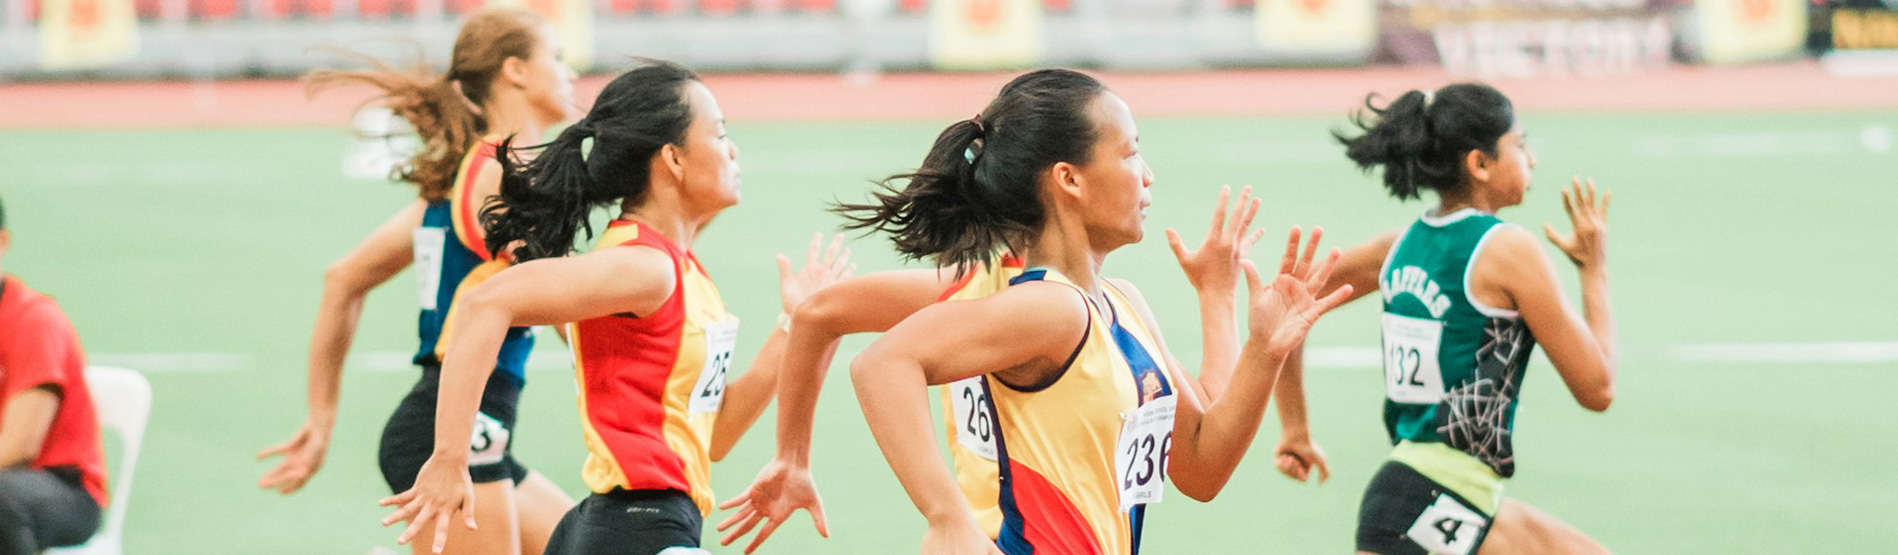 Elite women athletes running